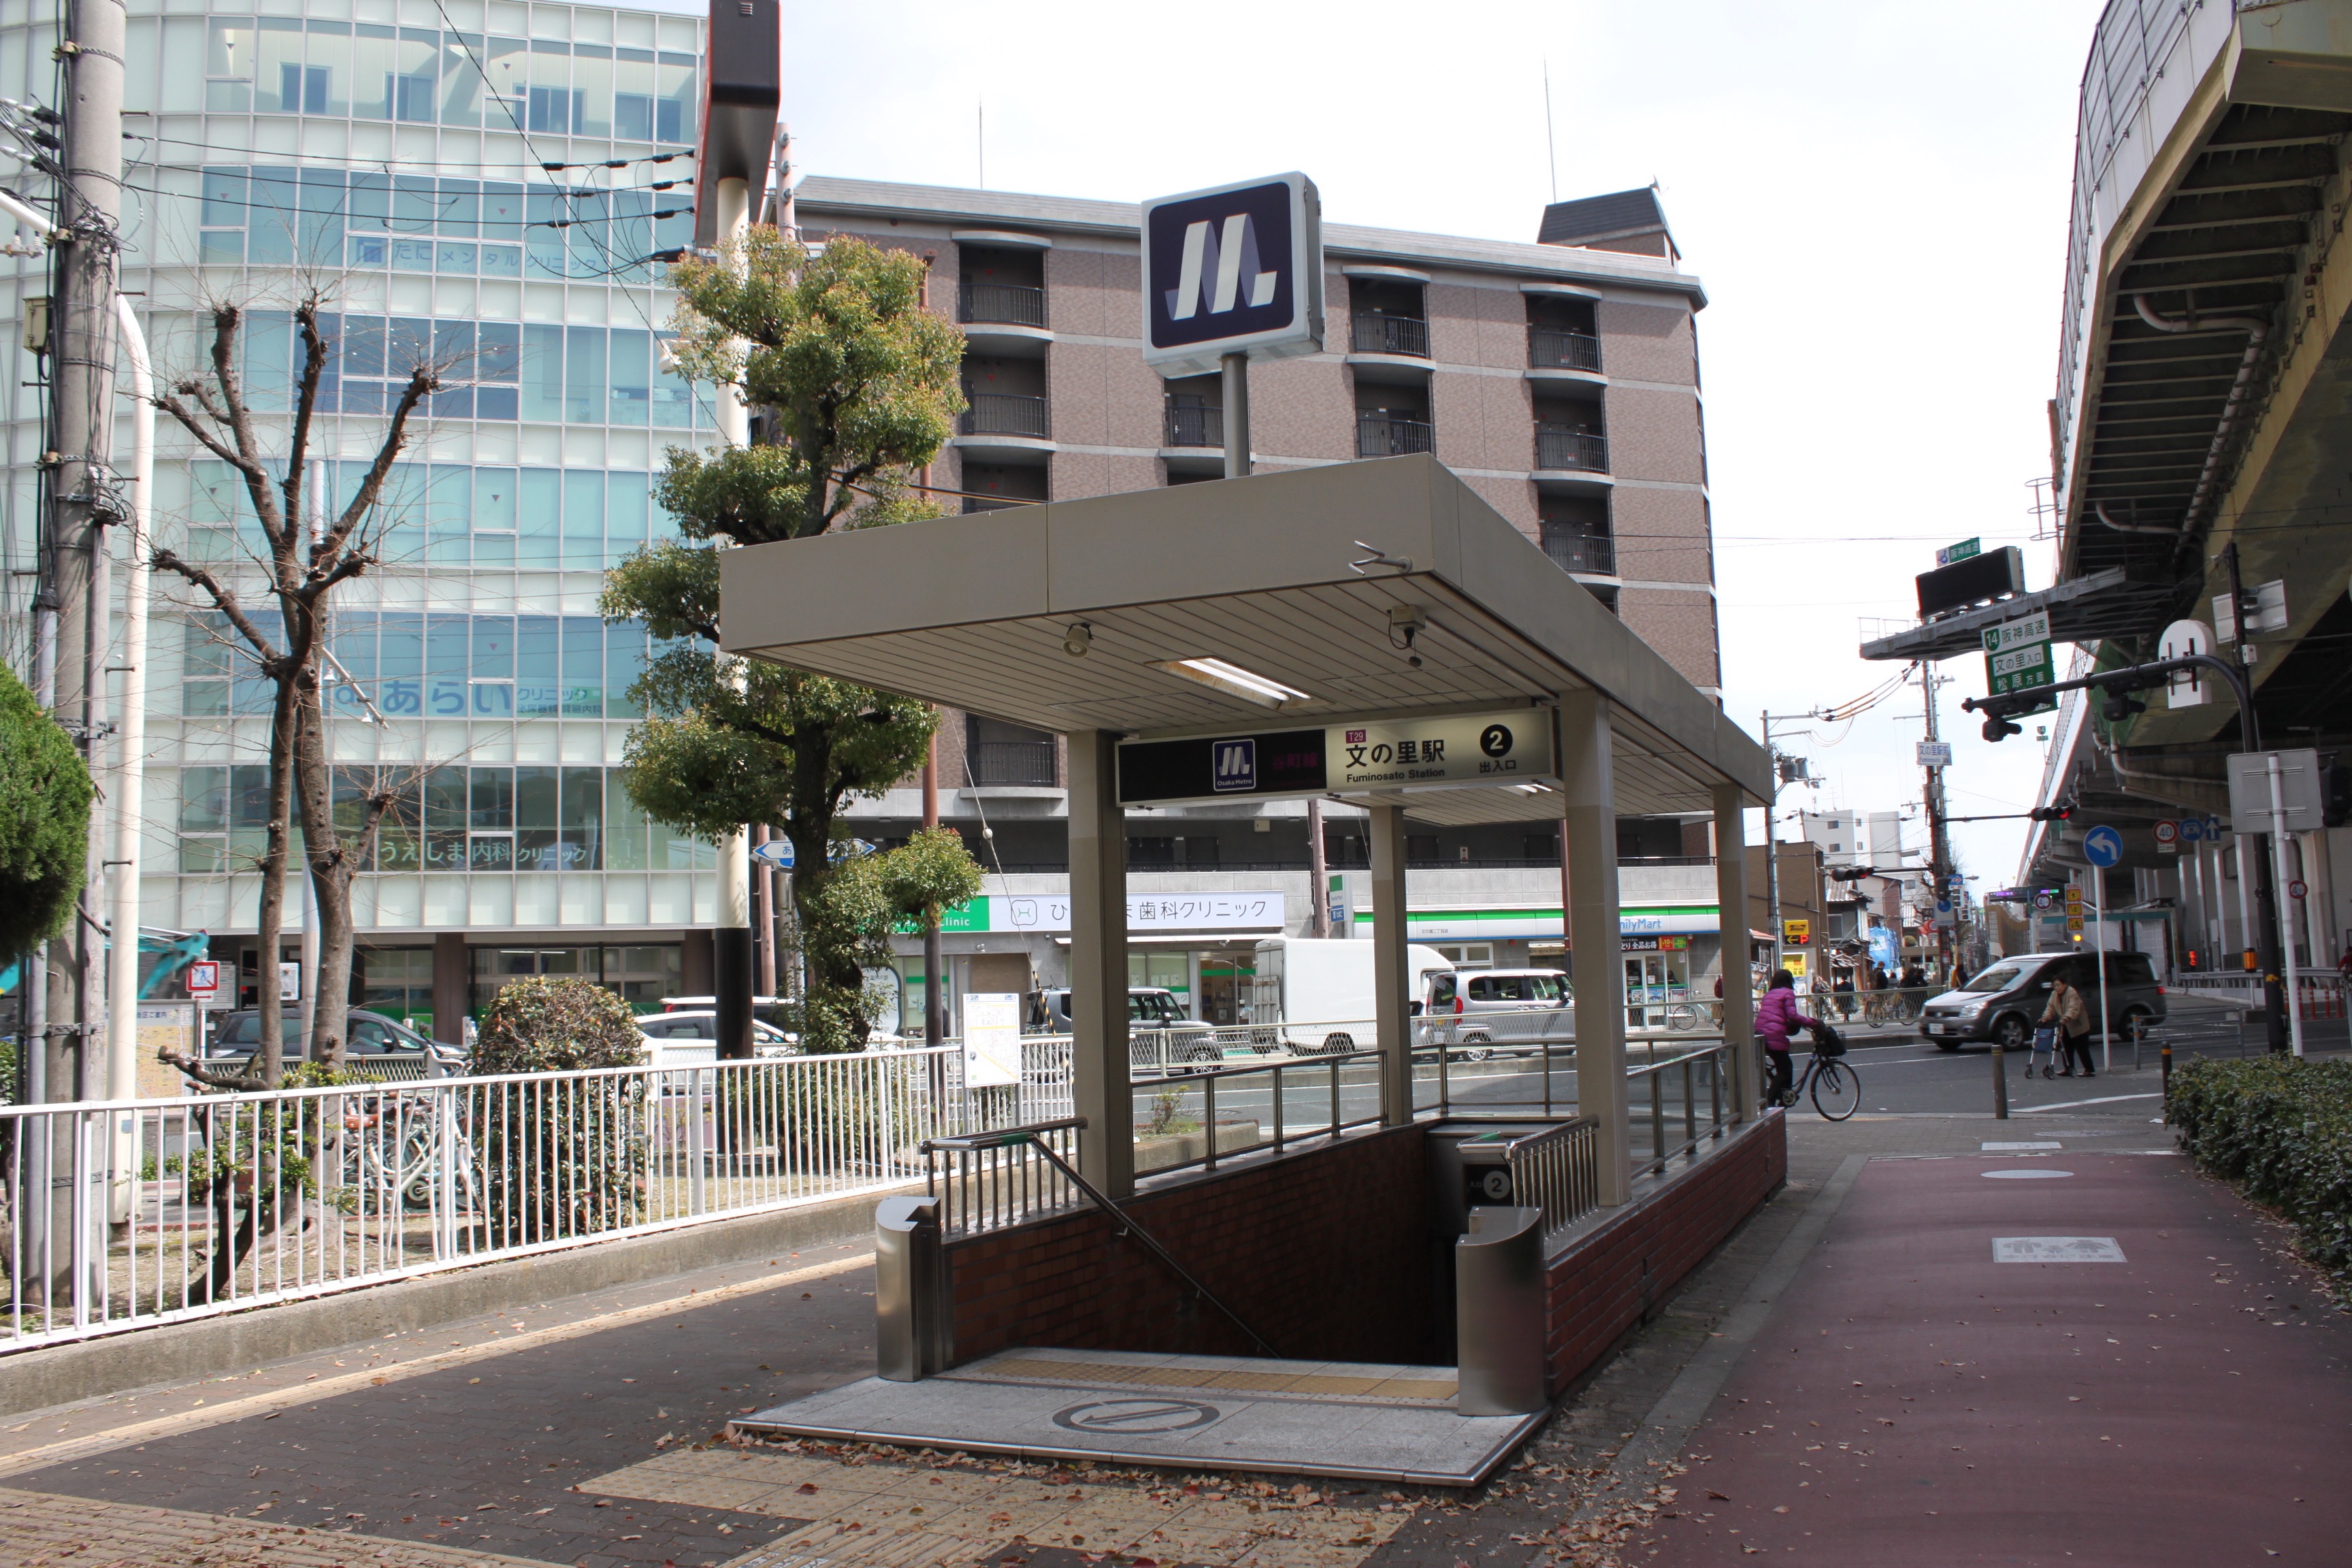 OsakaMetro谷町線「文の里」駅 説明写真